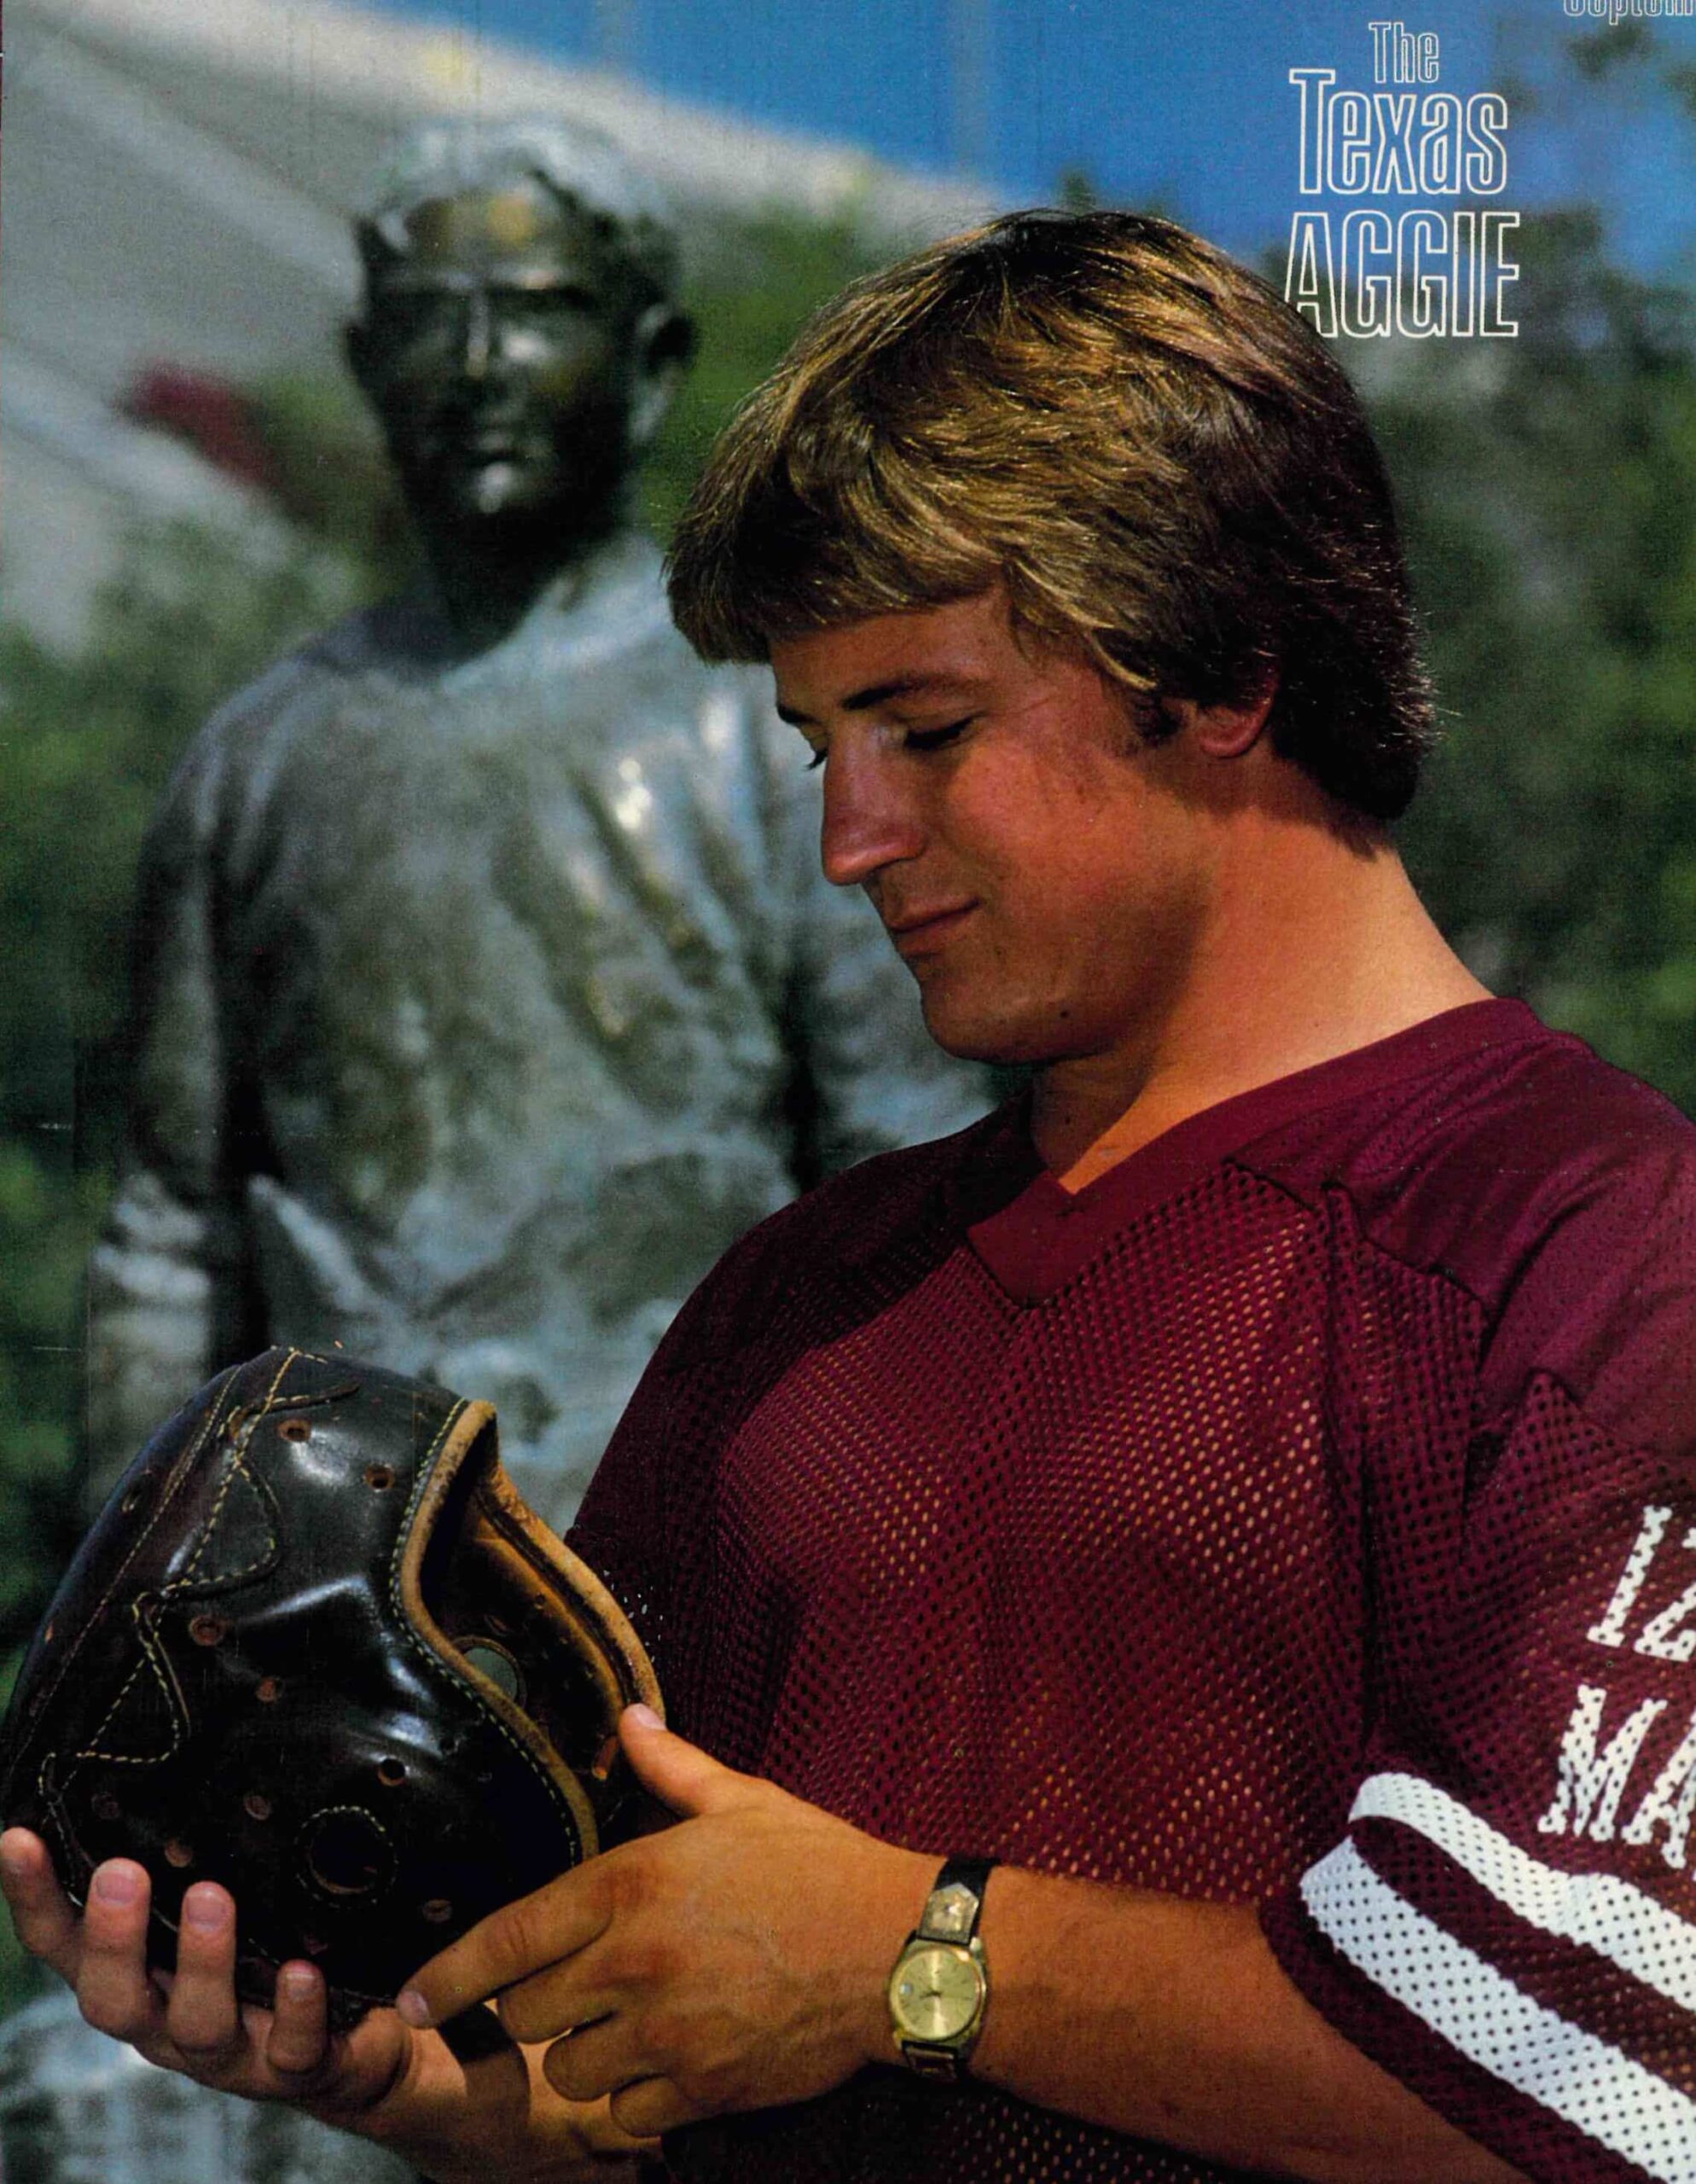 James Barrett holding a football helmet, Texas Aggie issue